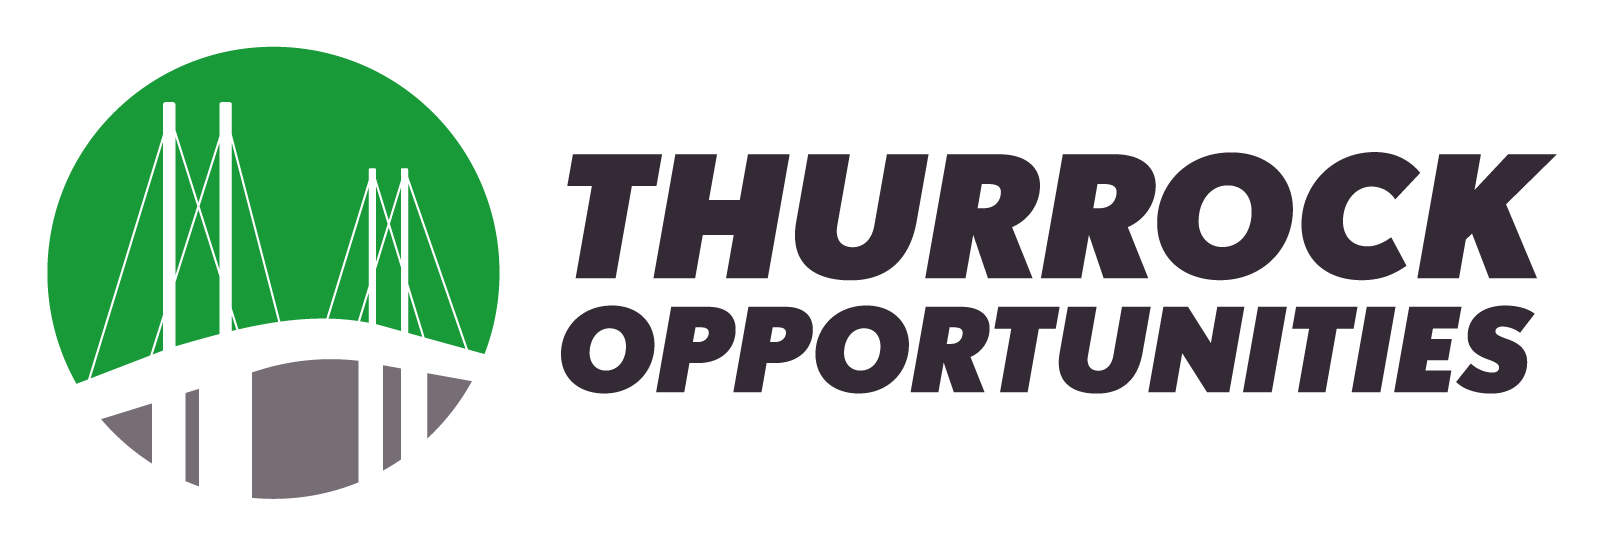 Thurrock Opportunities logo